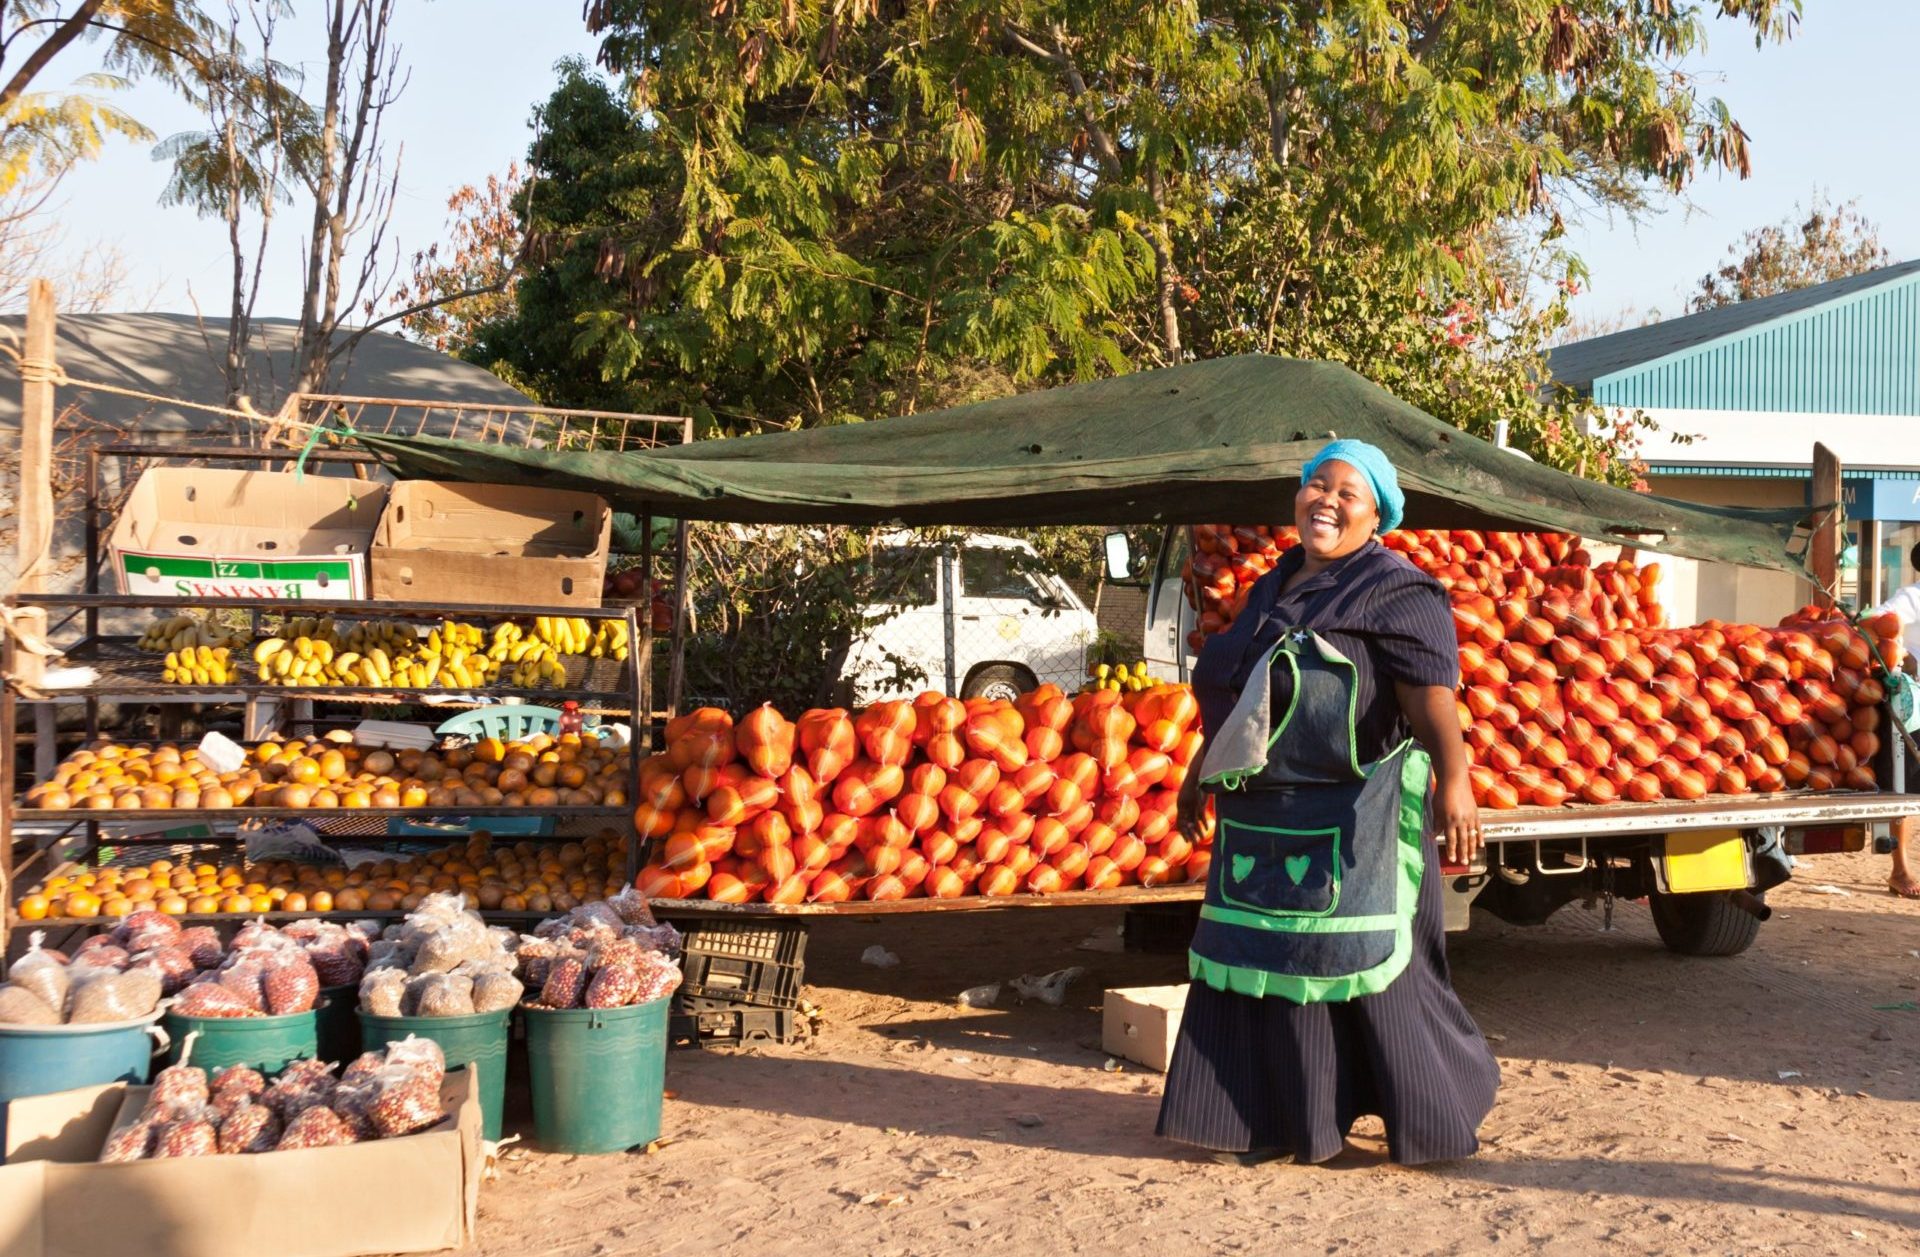 African woman street vendor